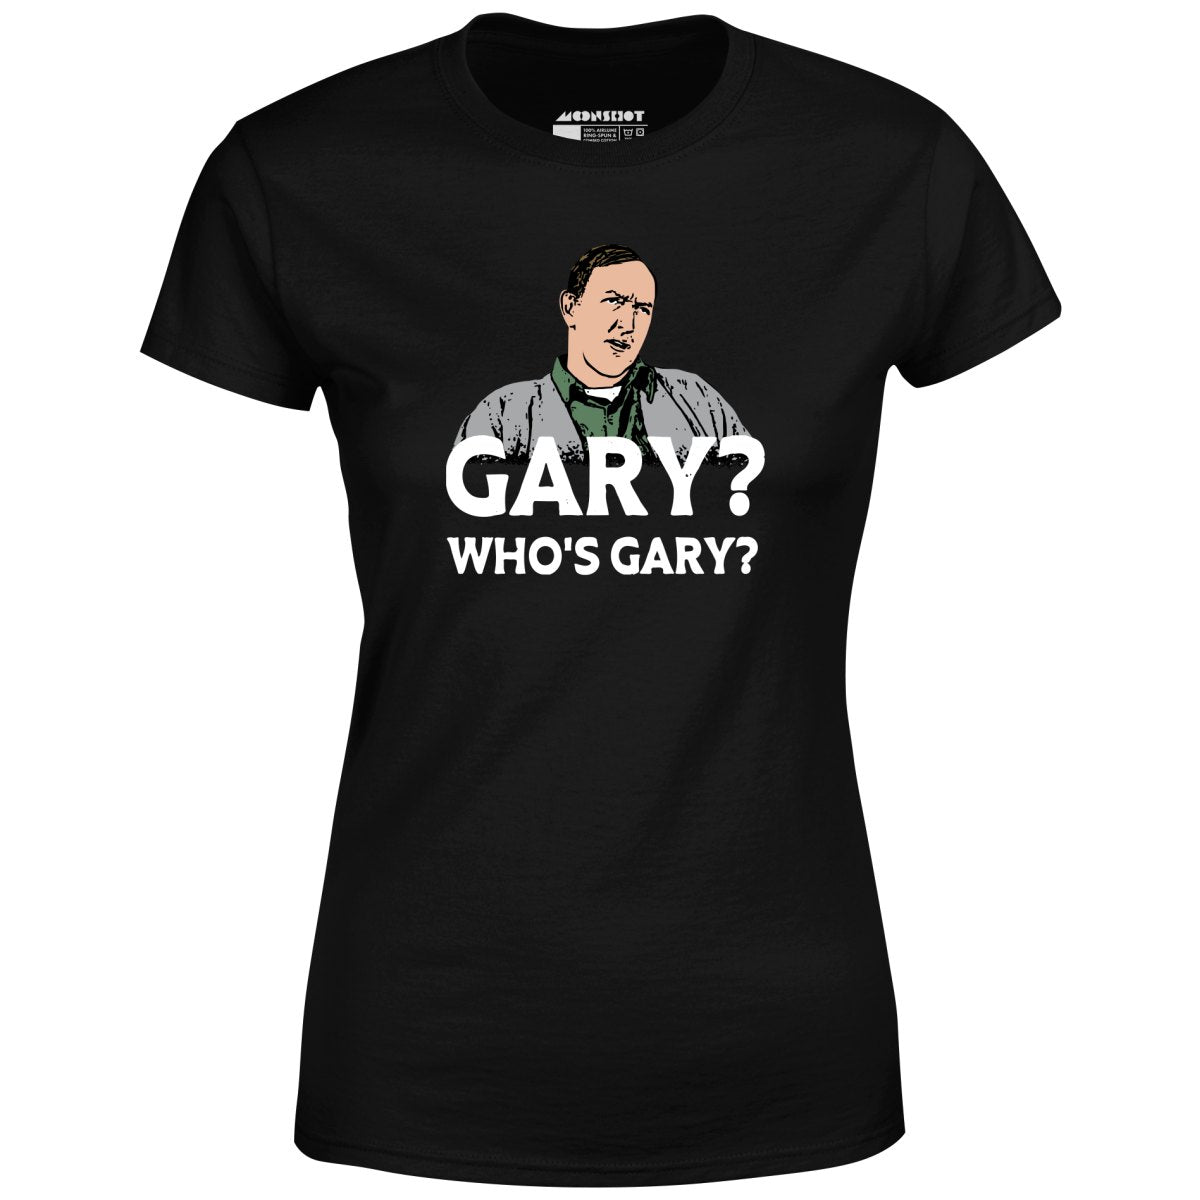 Gary? Who's Gary? - Women's T-Shirt